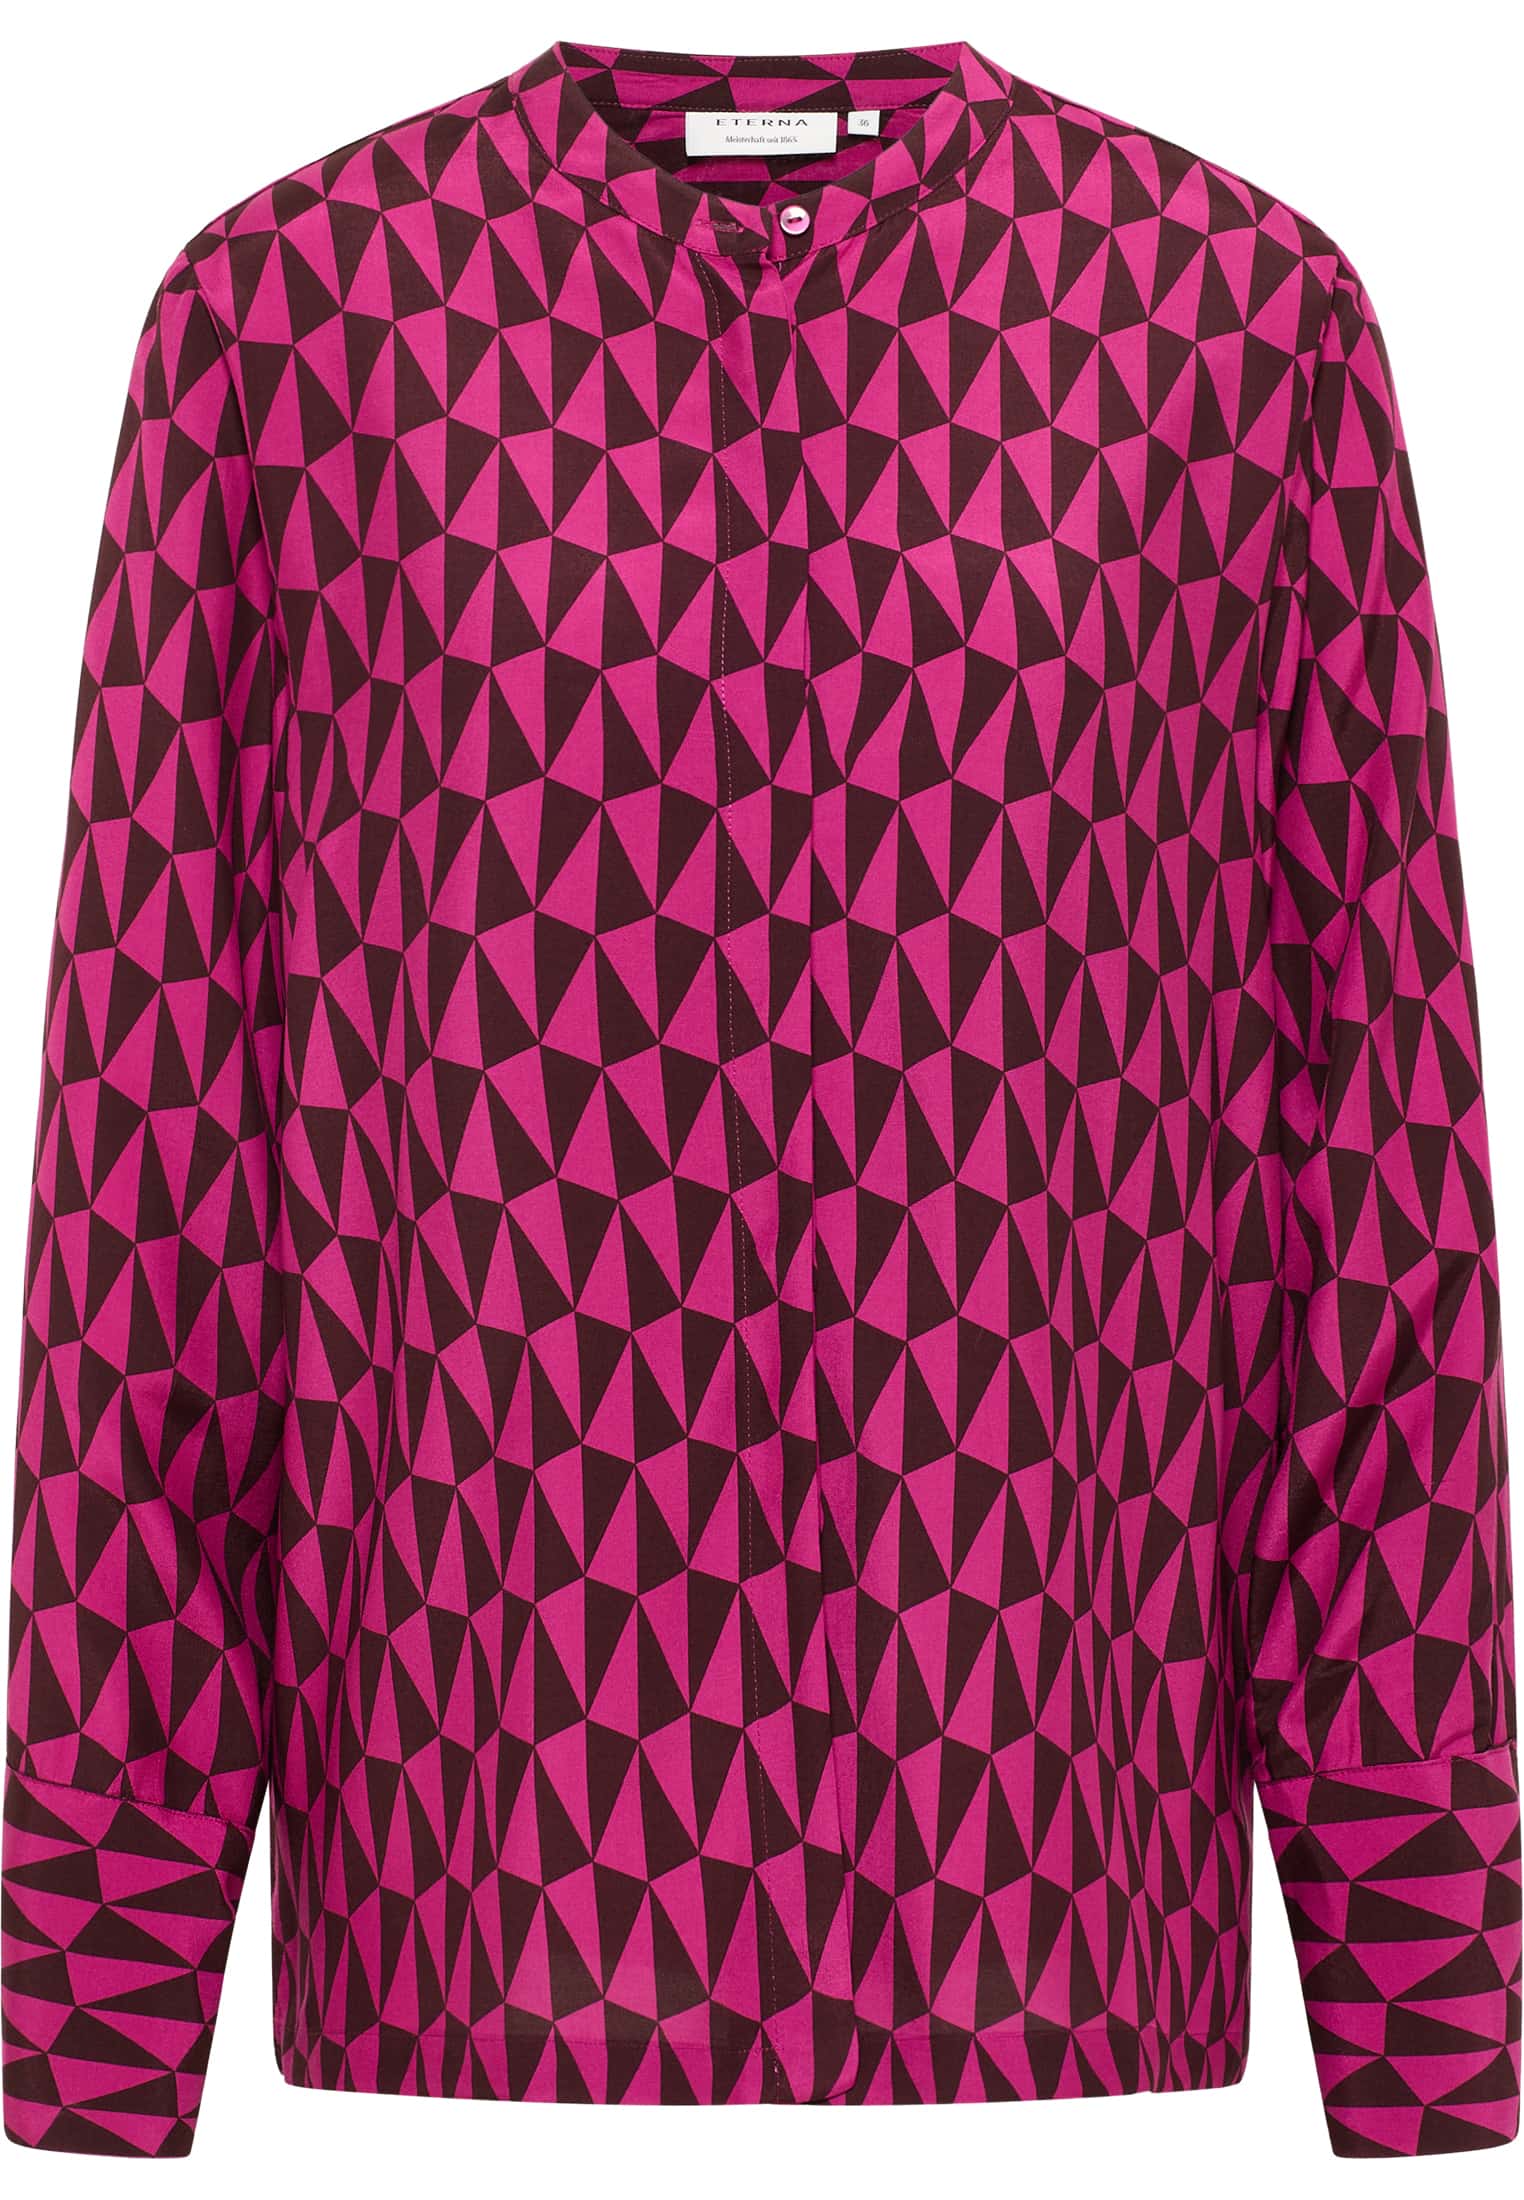 Blusenshirt | in 2BL04250-15-21-42-1/1 pink | Langarm bedruckt | pink | 42